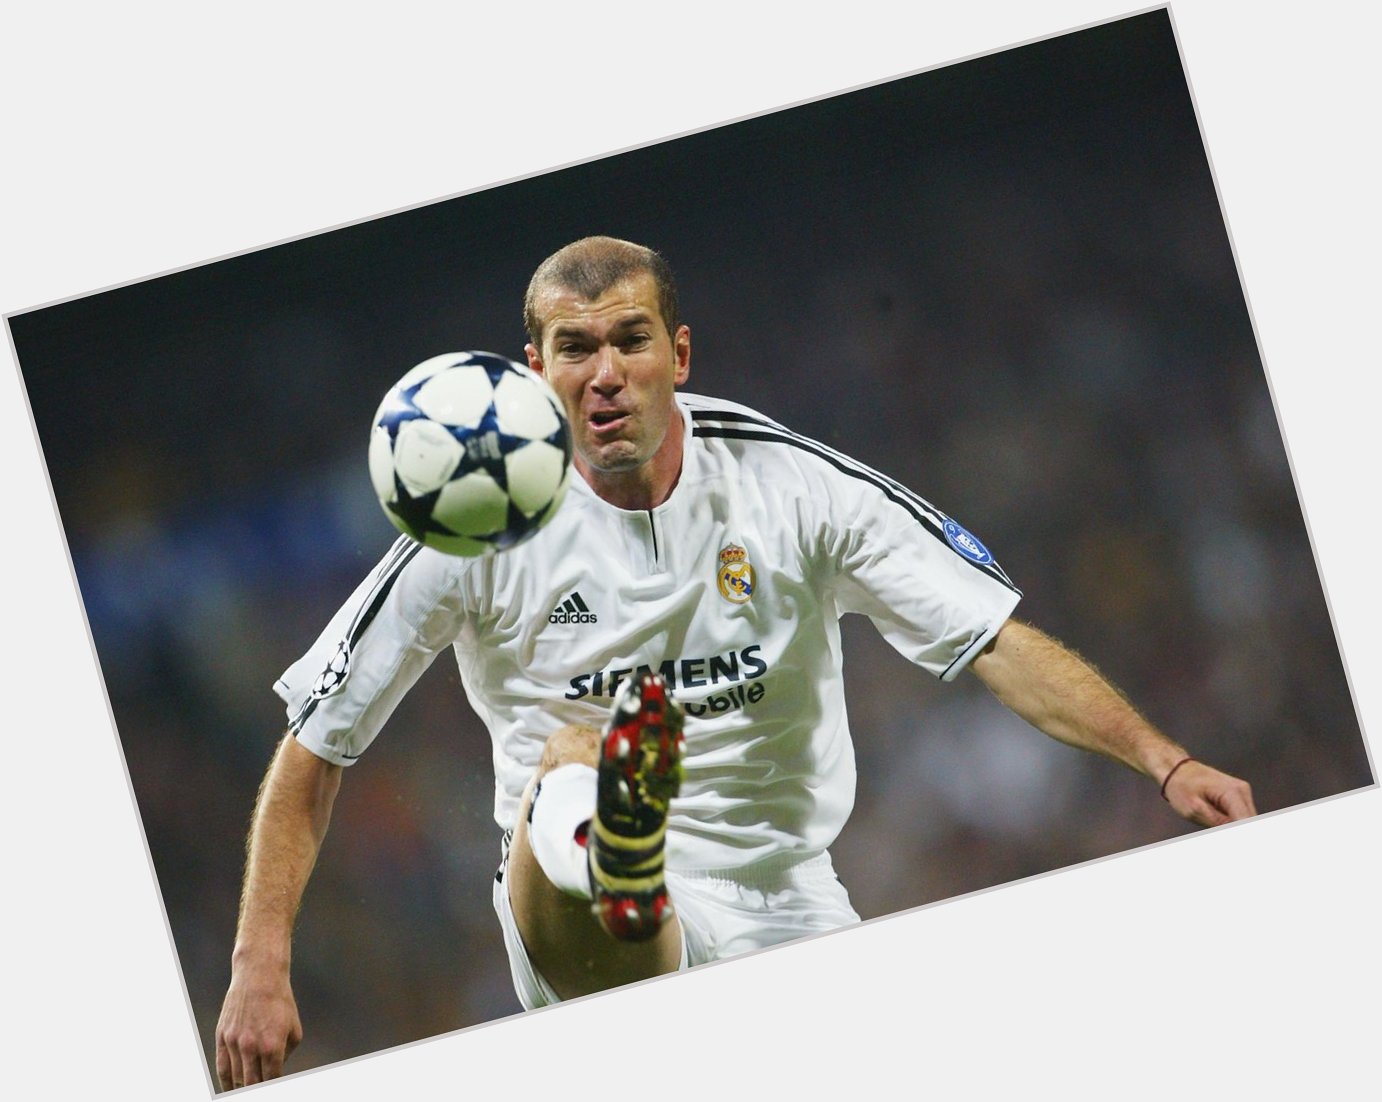   ChampionsLeague: Happy birthday, realmadriden and juventusfcen legend Zinédine Zidane ! 